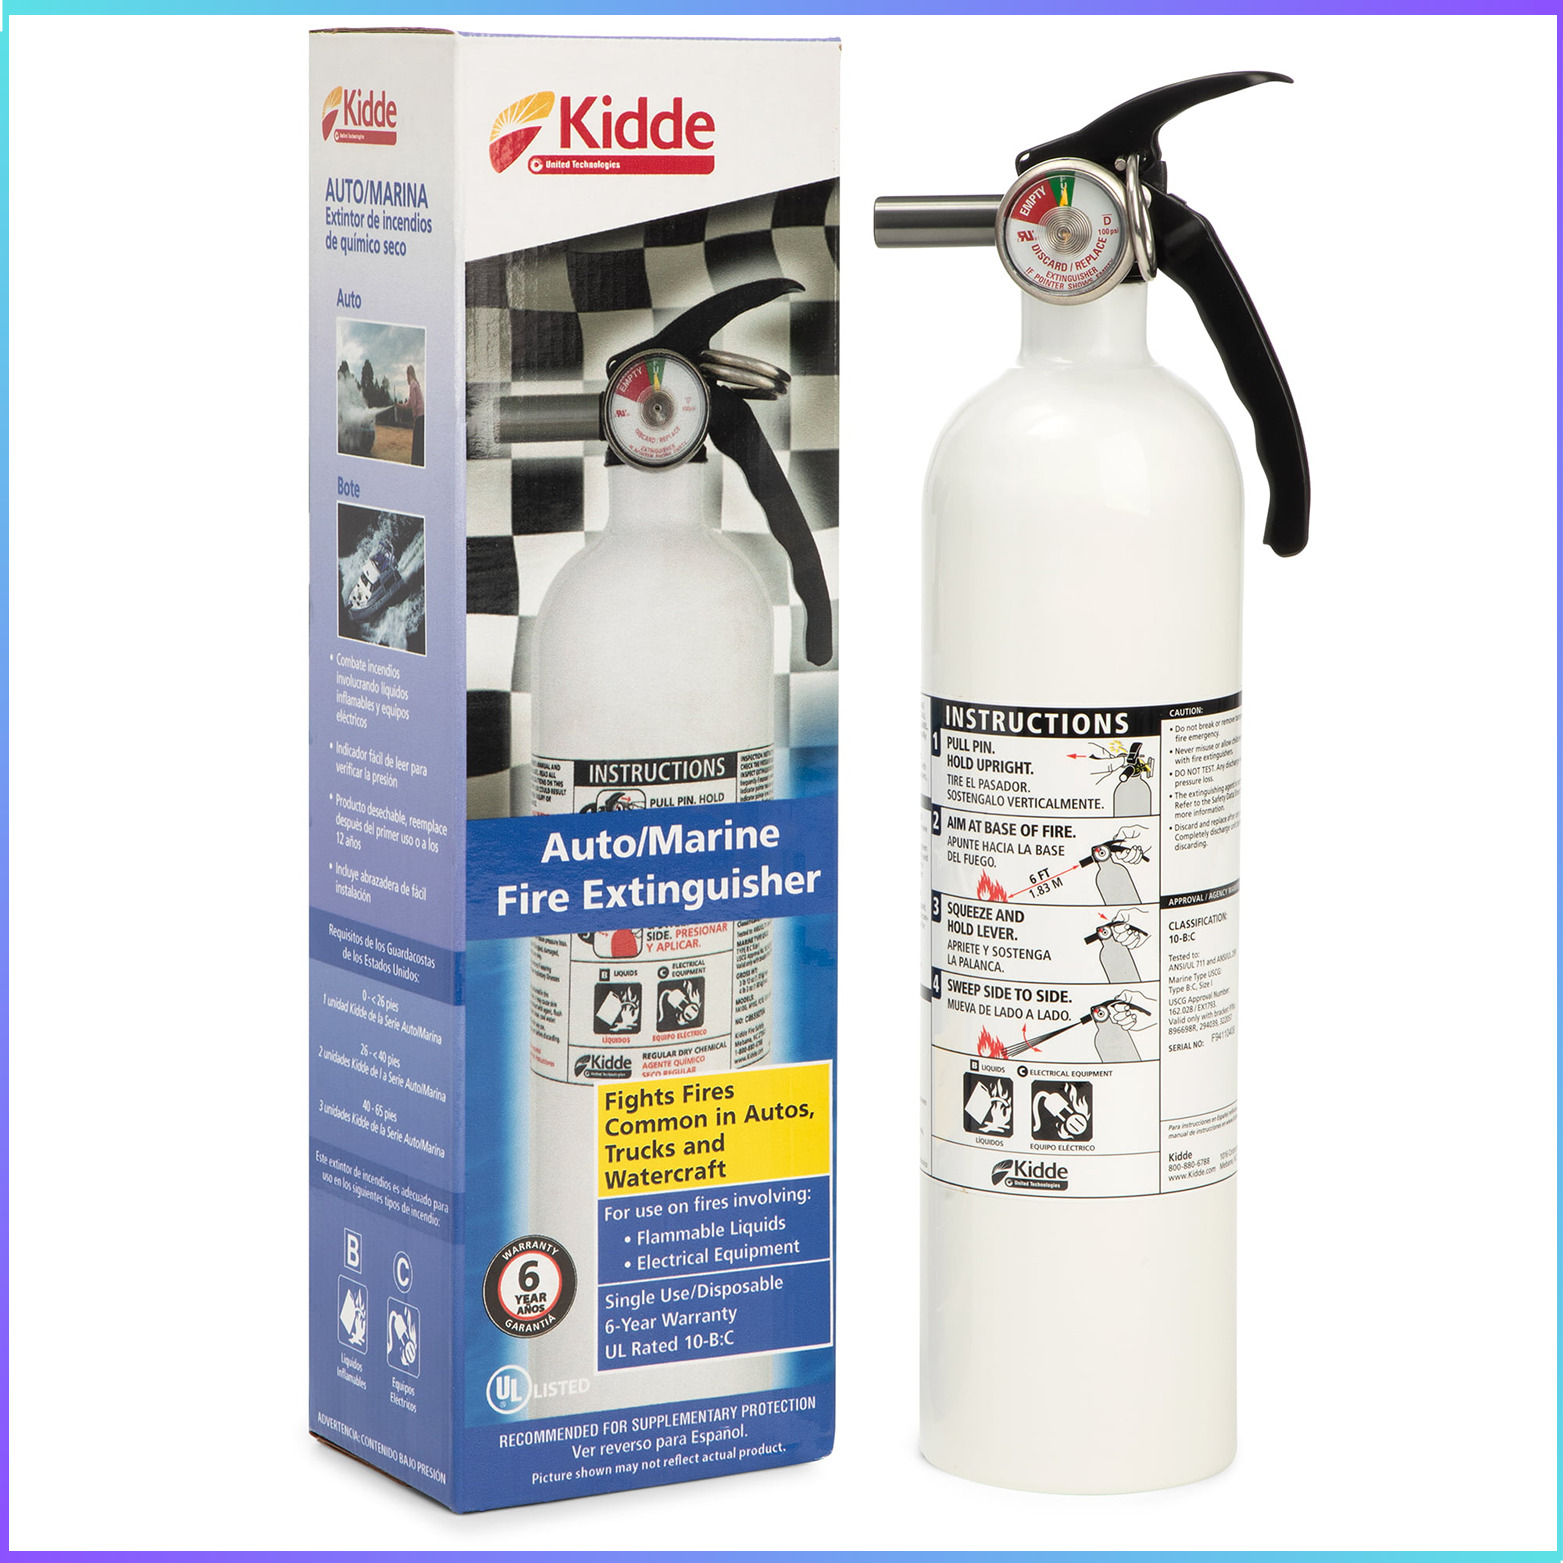 Kidde Auto/Marine UL Rating 10-B:C Fire Extinguisher - White (21029372)